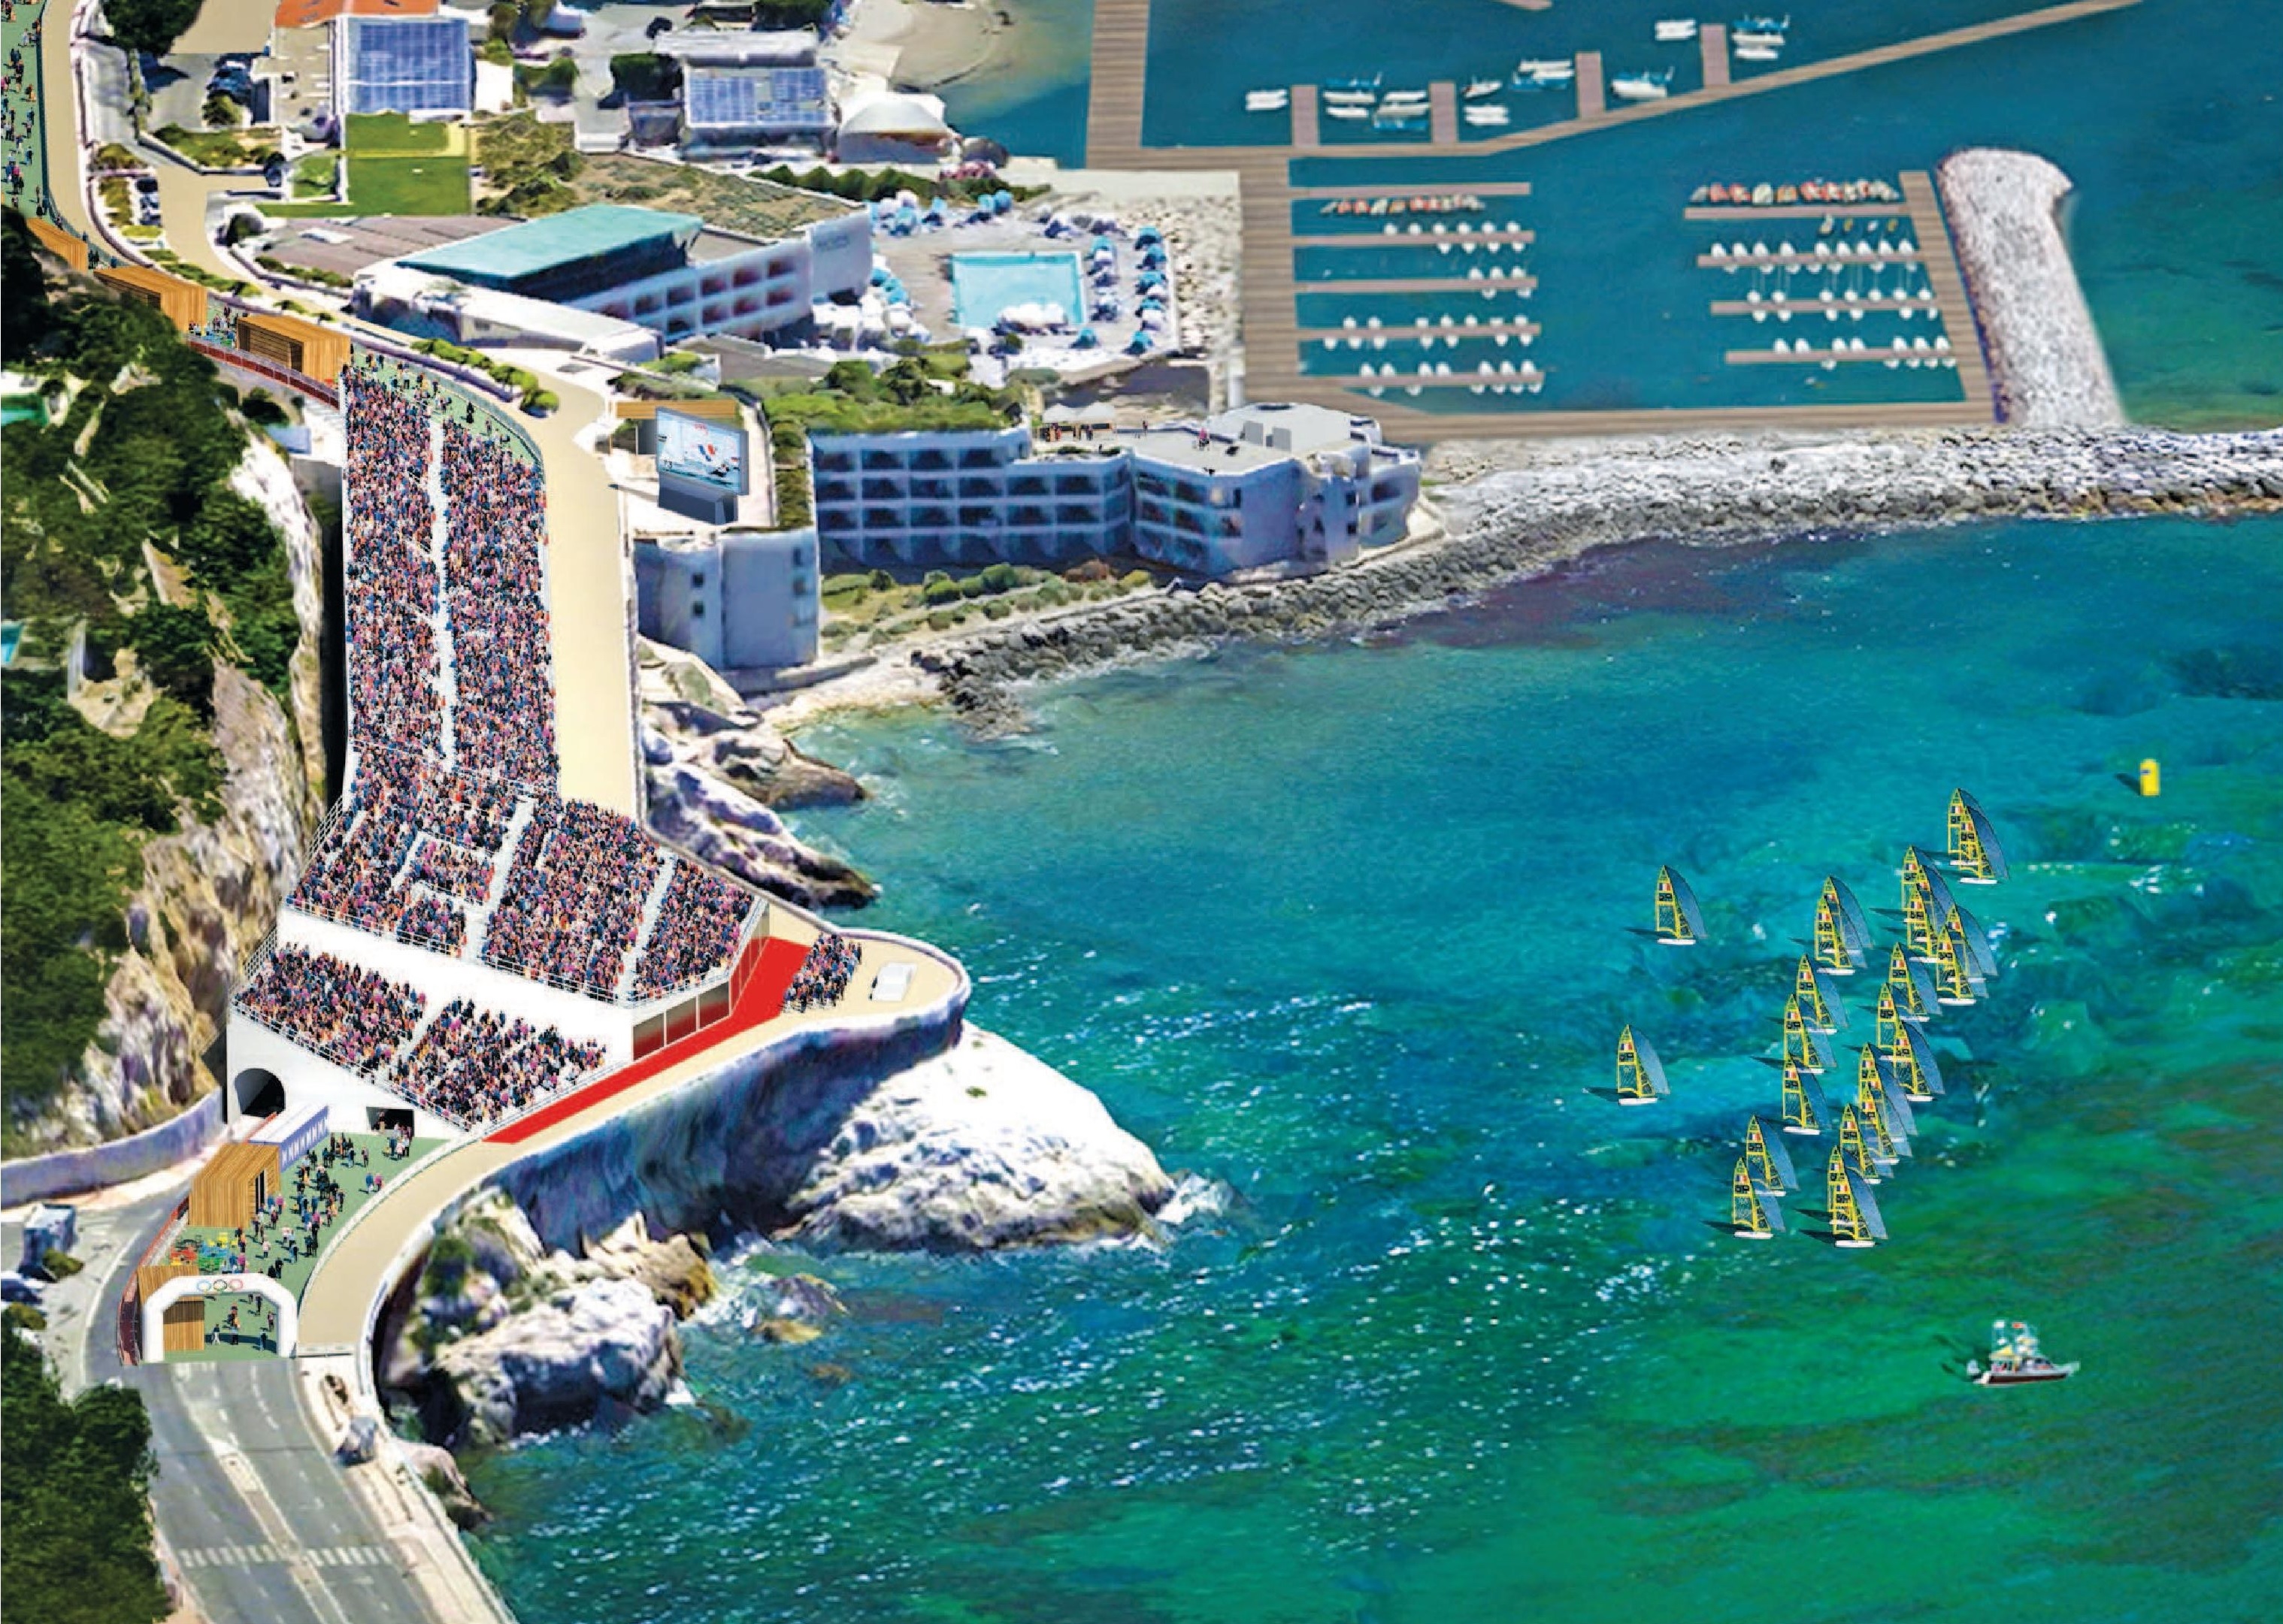 Marina de Marseille (Voile) PARIS 2024